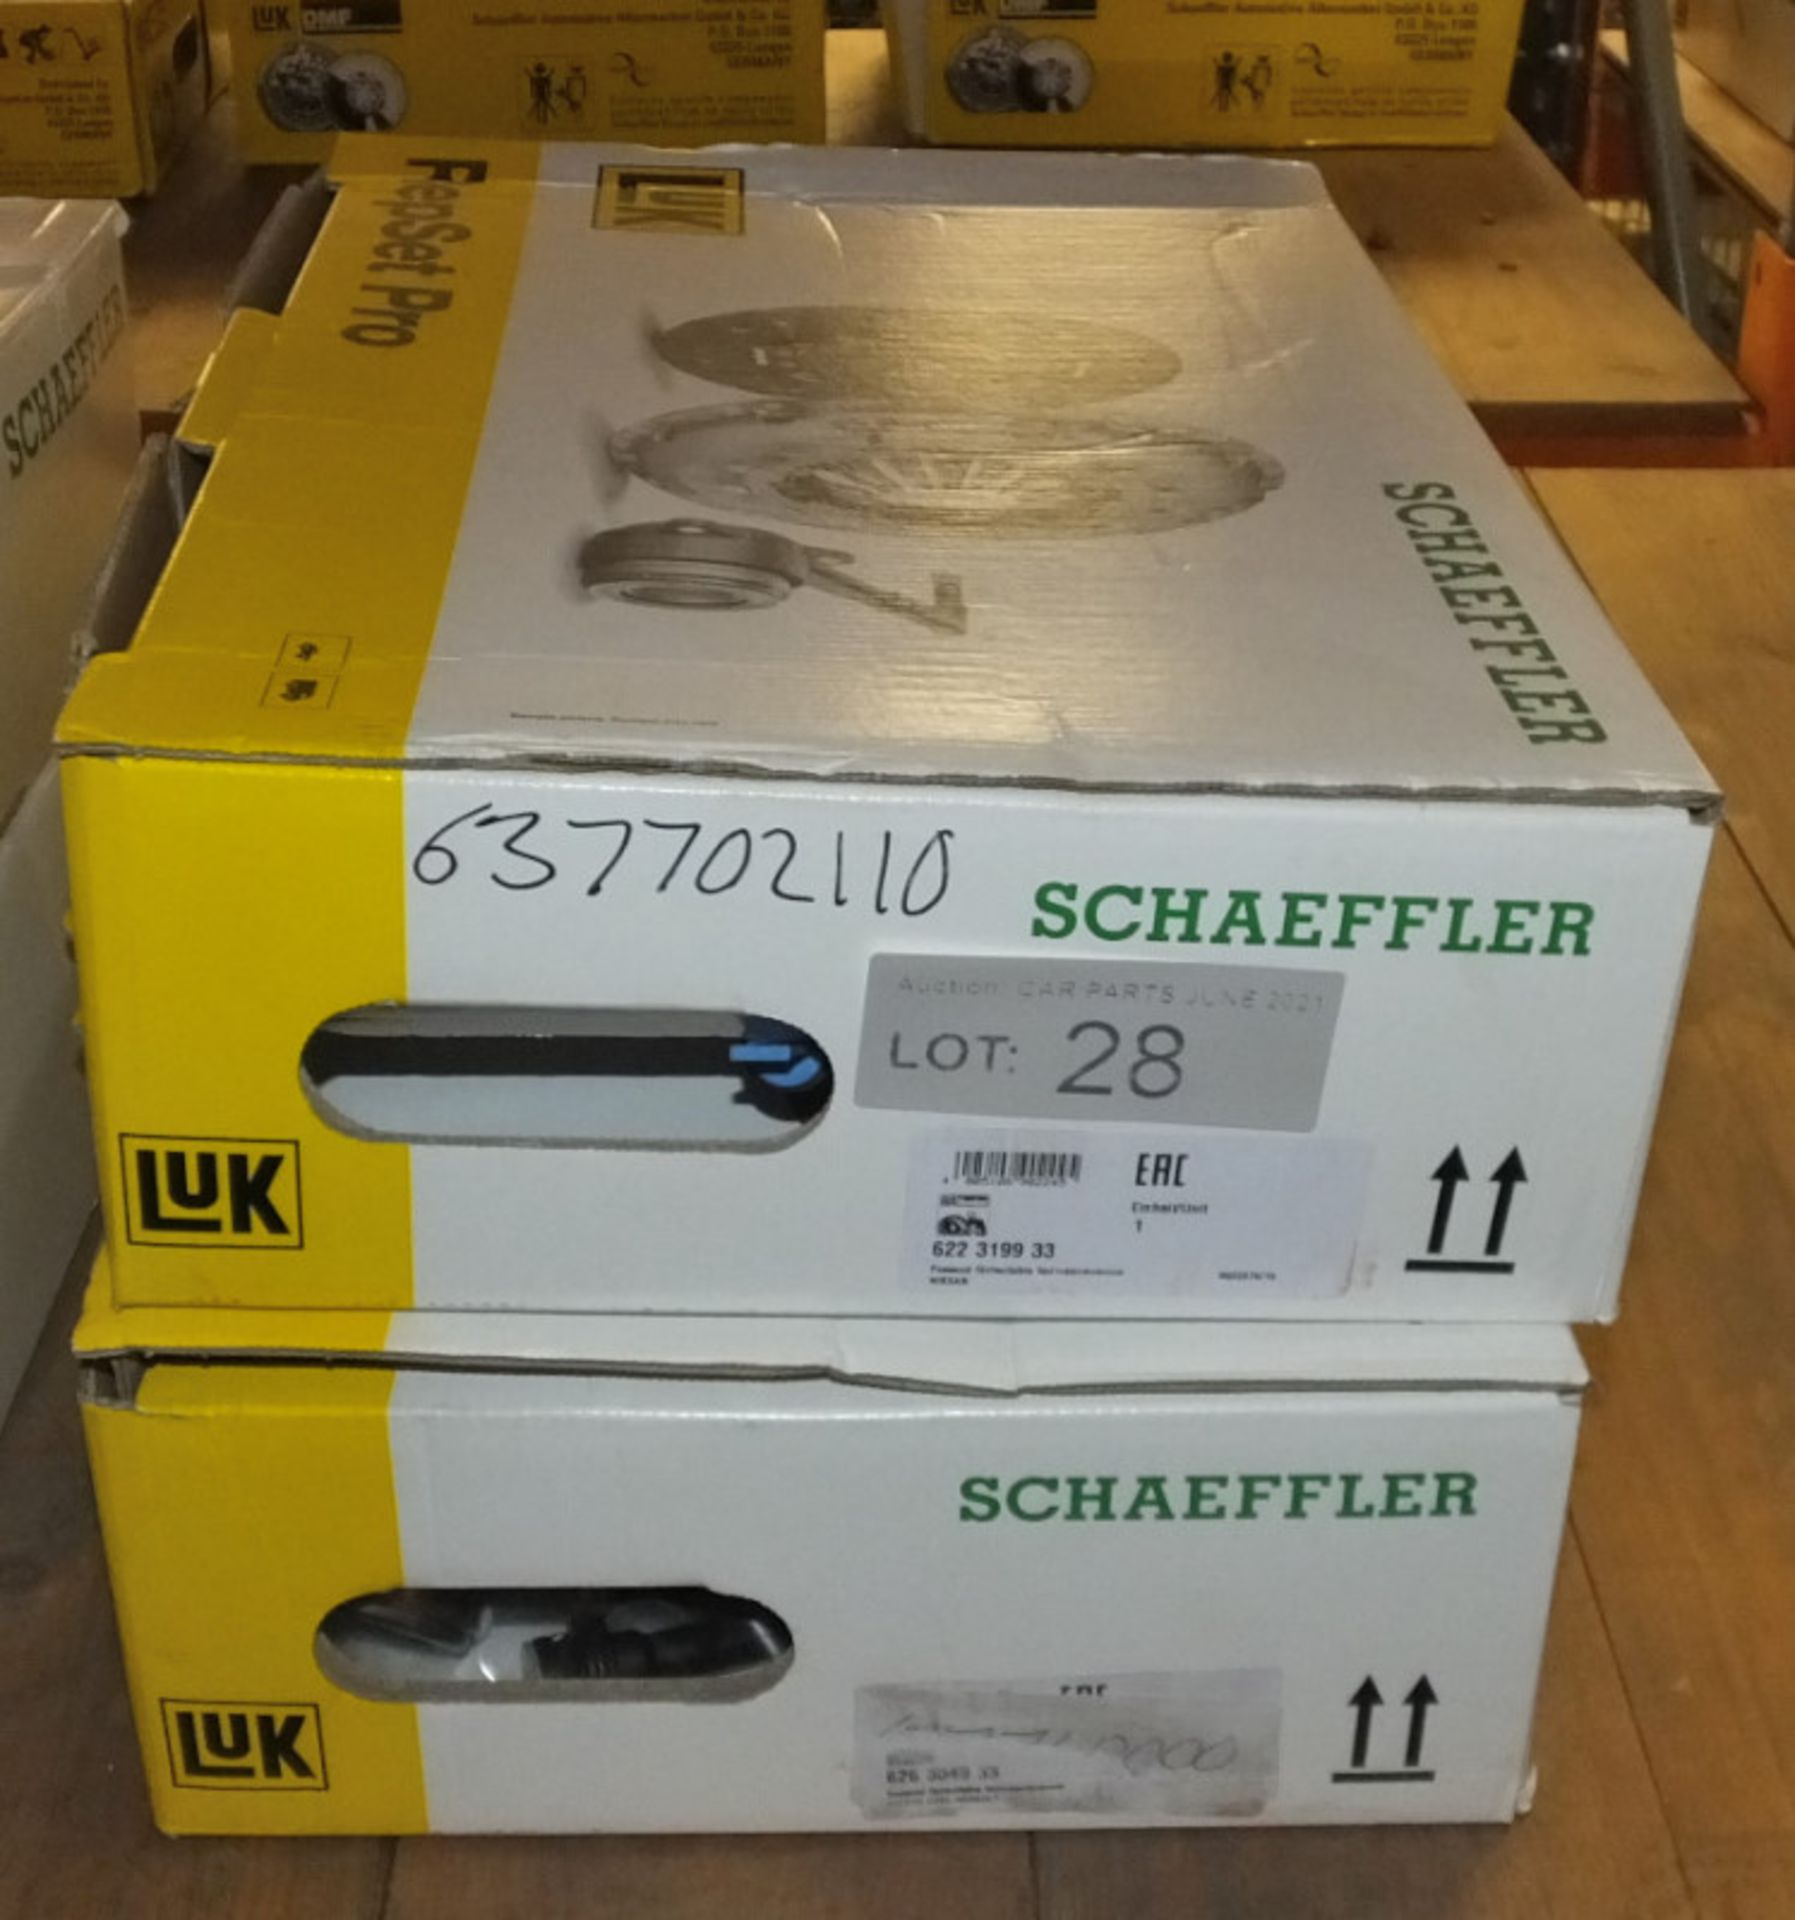 2x LUK Schaeffler Repset Pro Clutch Kits - Models - 622 3199 33 & 626 3049 33